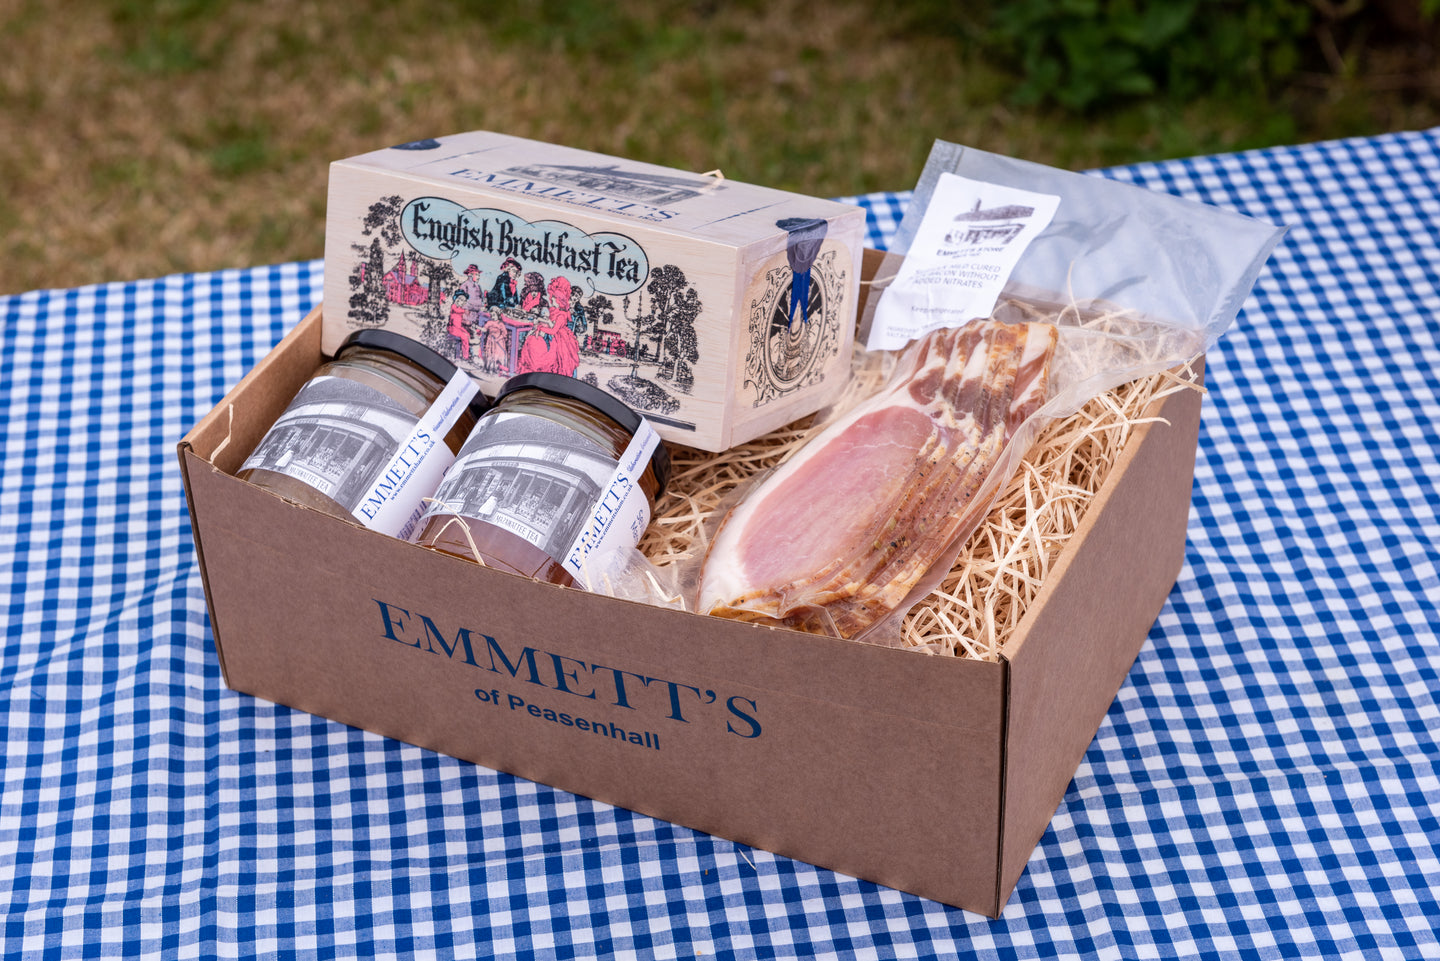 Emmett's Breakfast Tea Box - Emmett's